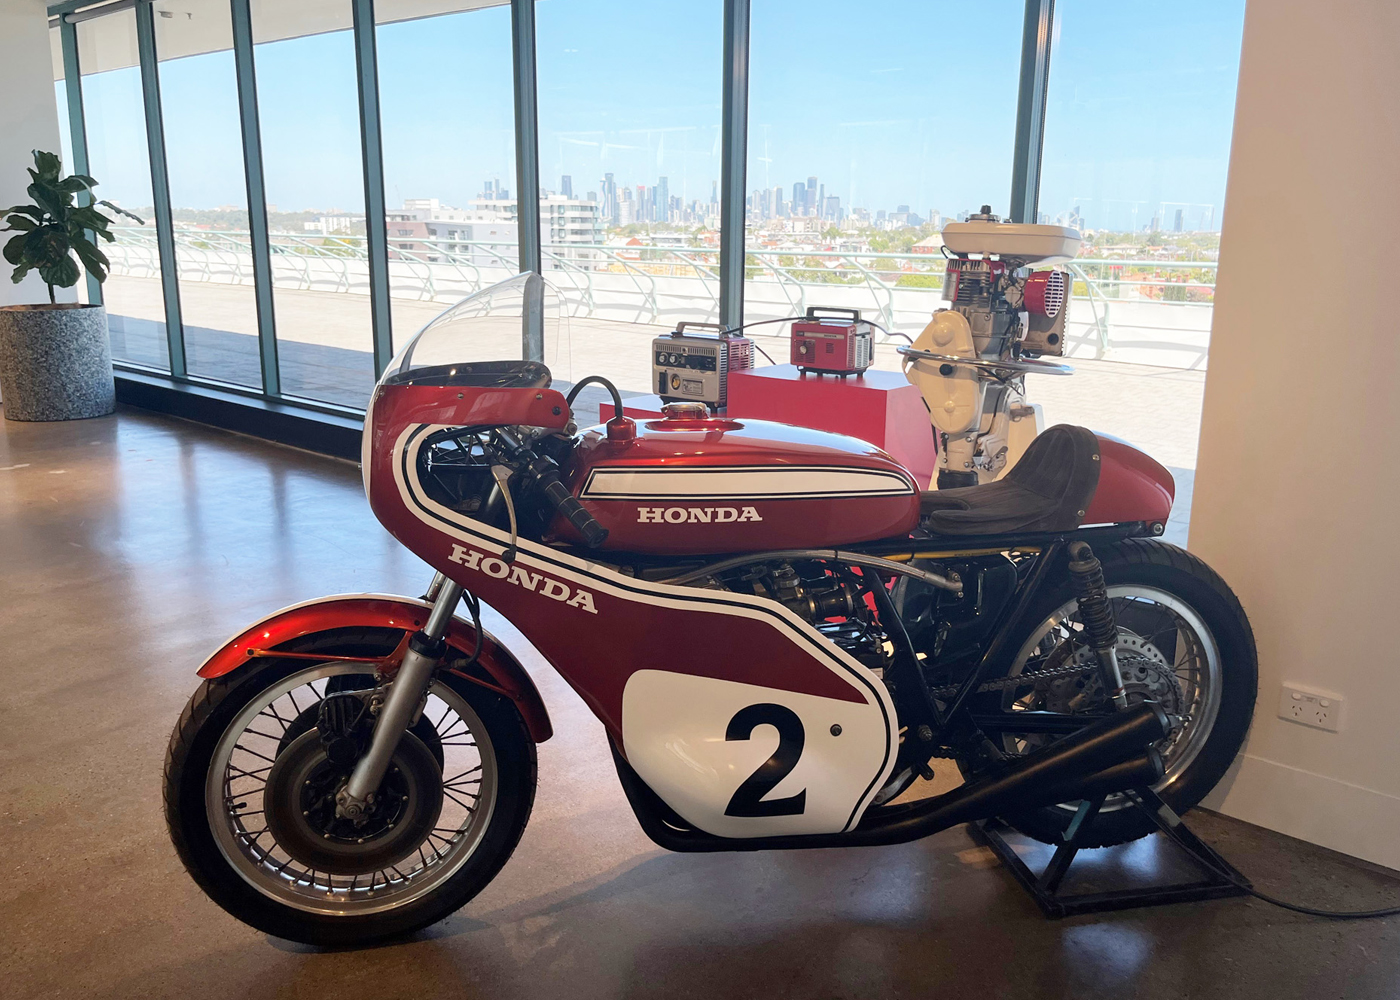 Honda Moonee Ponds Reception - View - Motorcycle